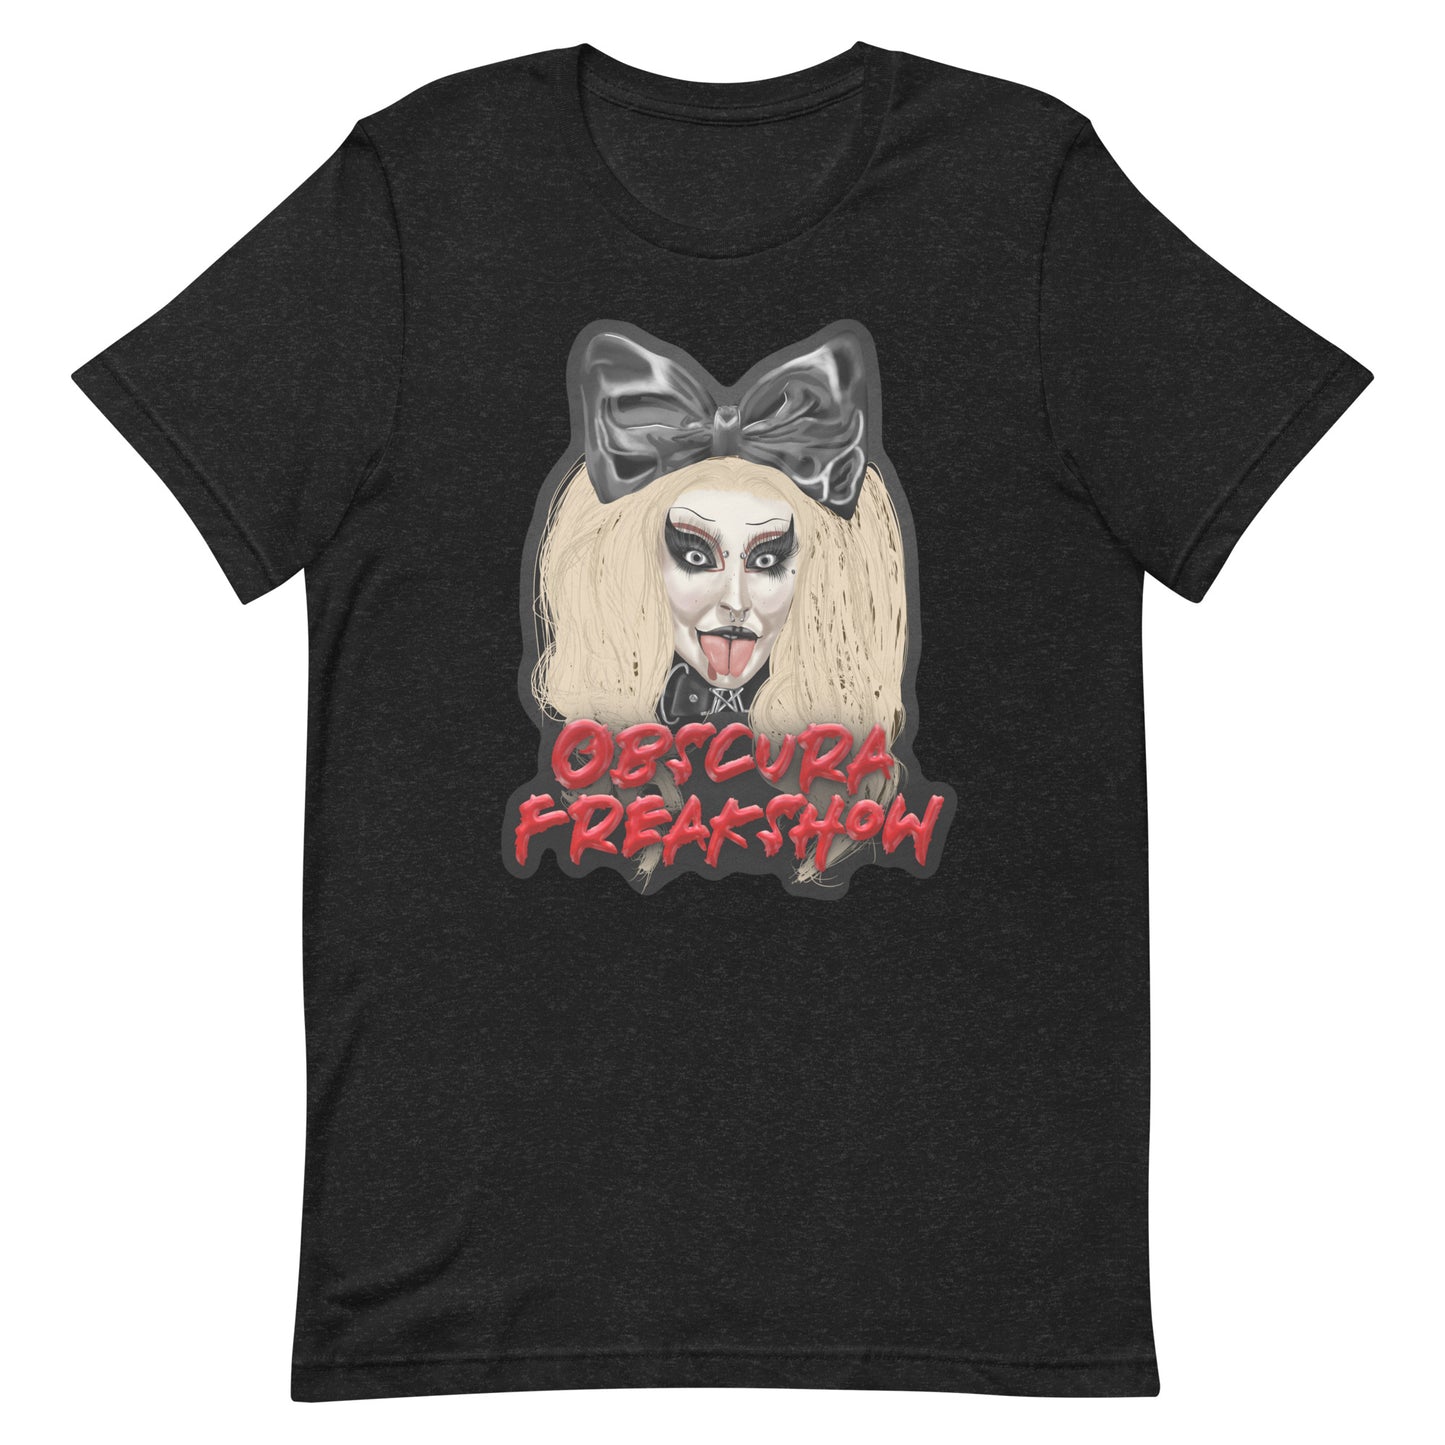 Obscura Freakshow Unisex t-shirt